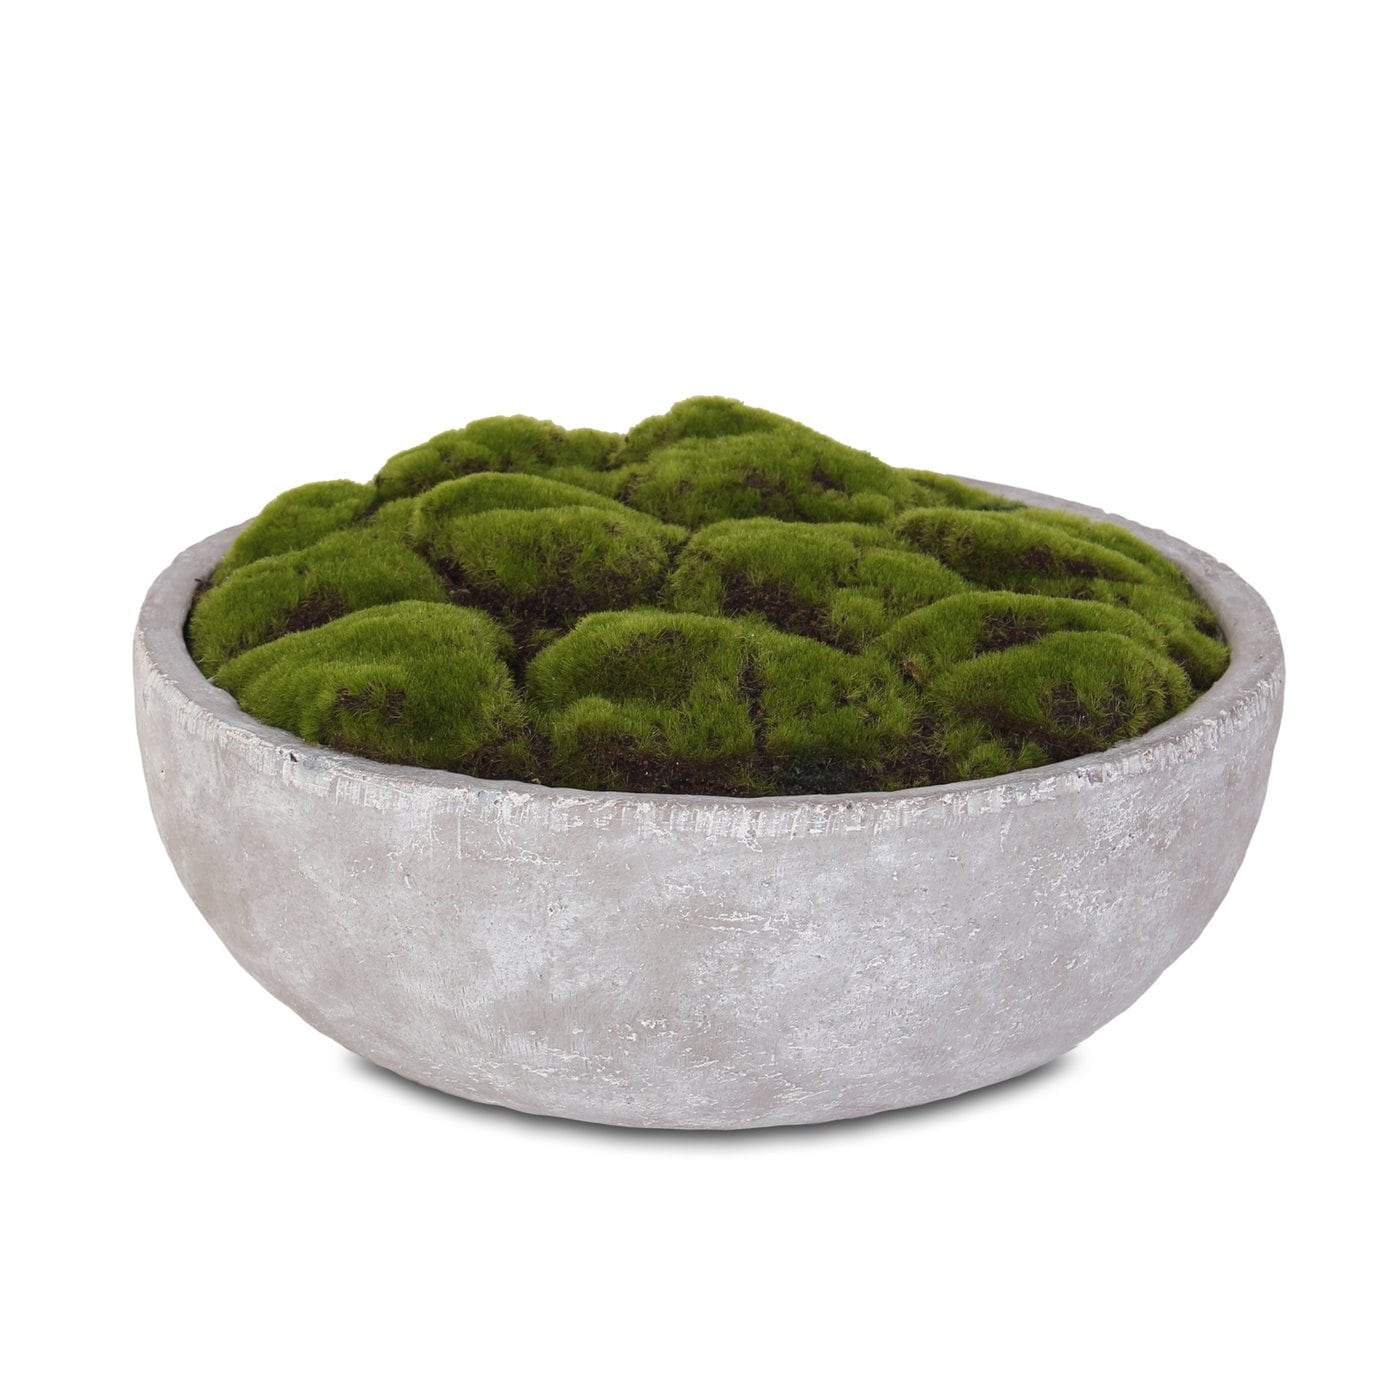 Macomine Design Moss Bowl |12 Diameter | Artificial | Hand-Painted Cement Bowl | Home Décor